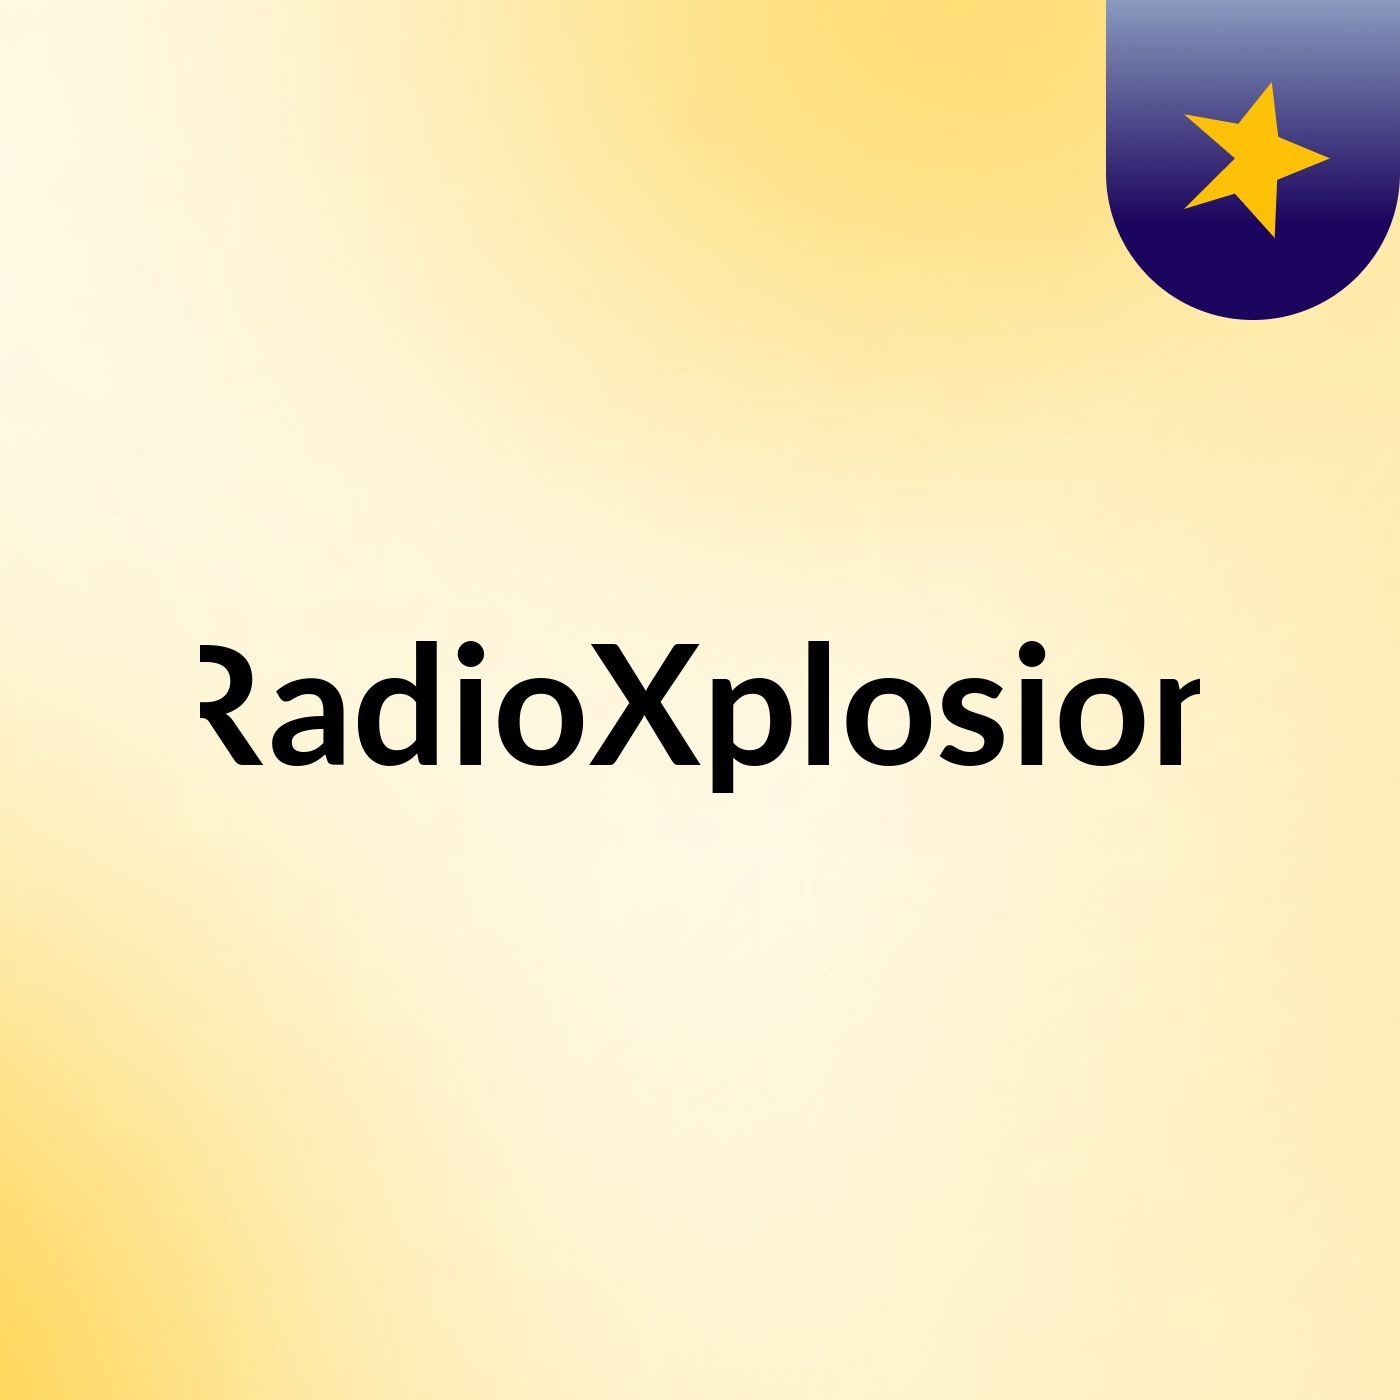 RadioXplosion